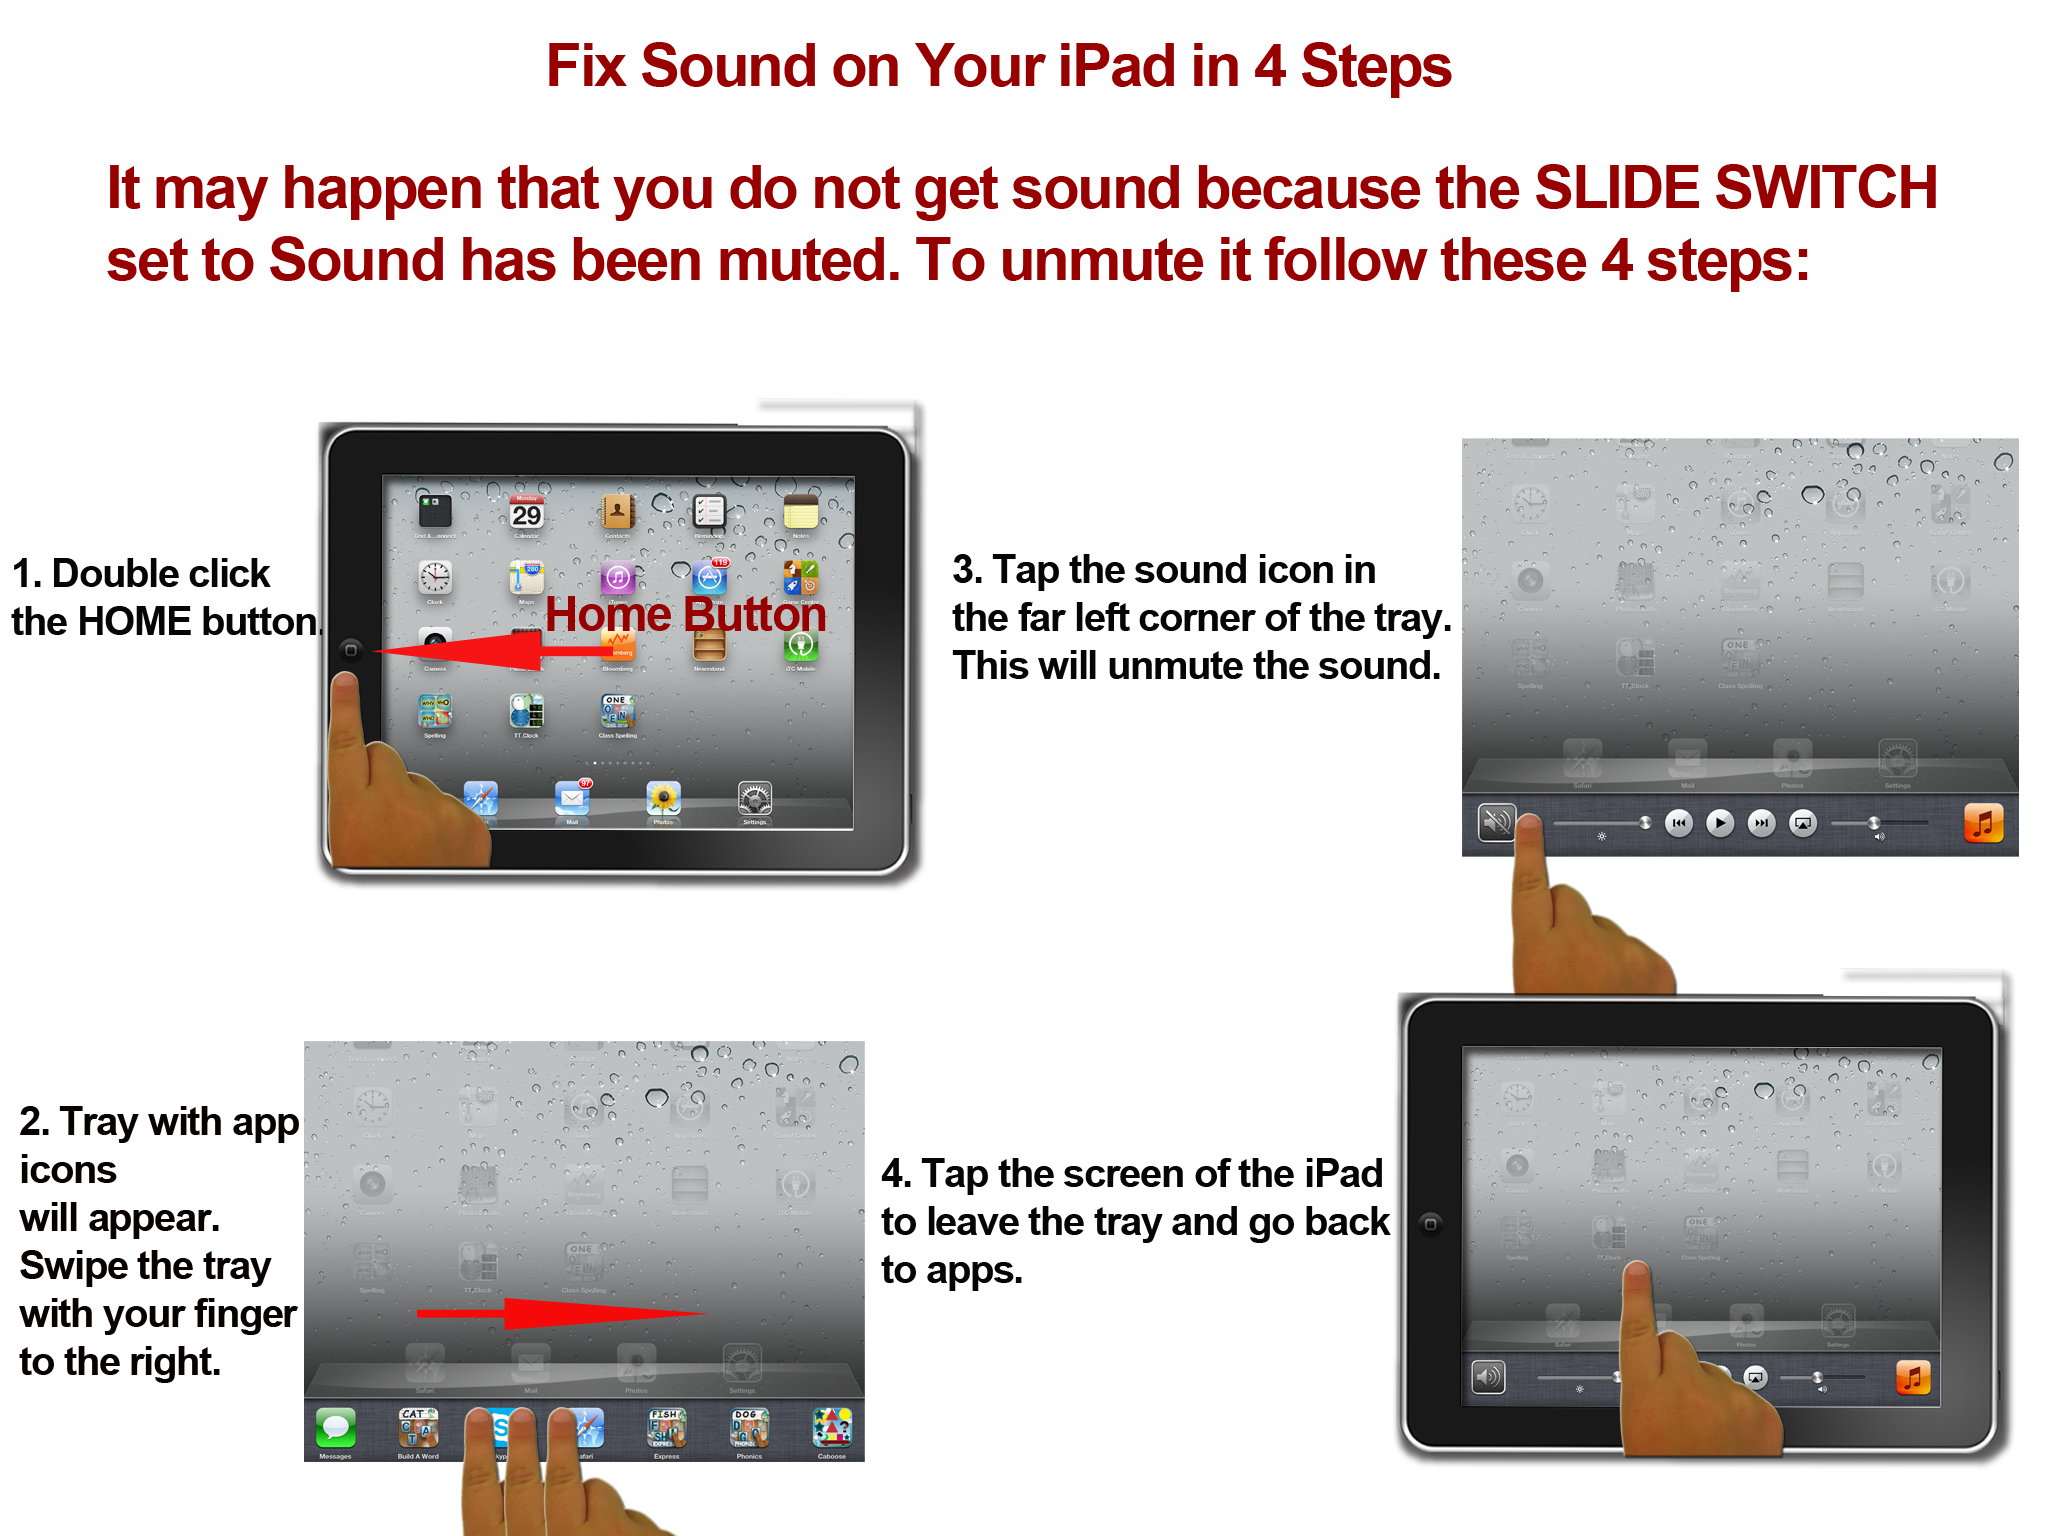 4 Steps to Fix Sound on iPad